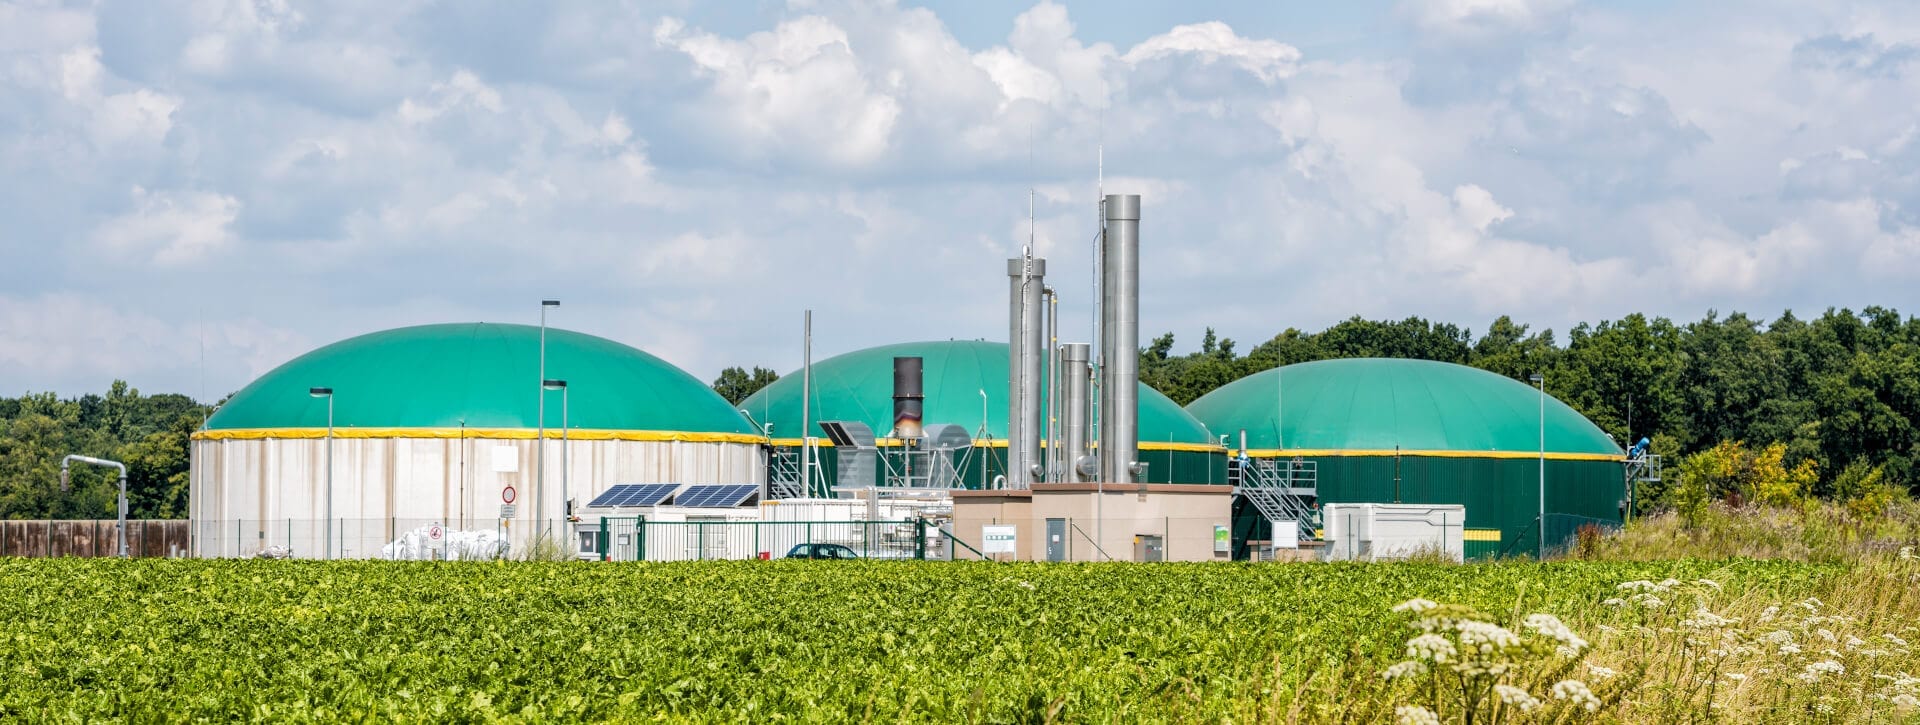 Innovative Bio Gas Technology by Skyline Energy